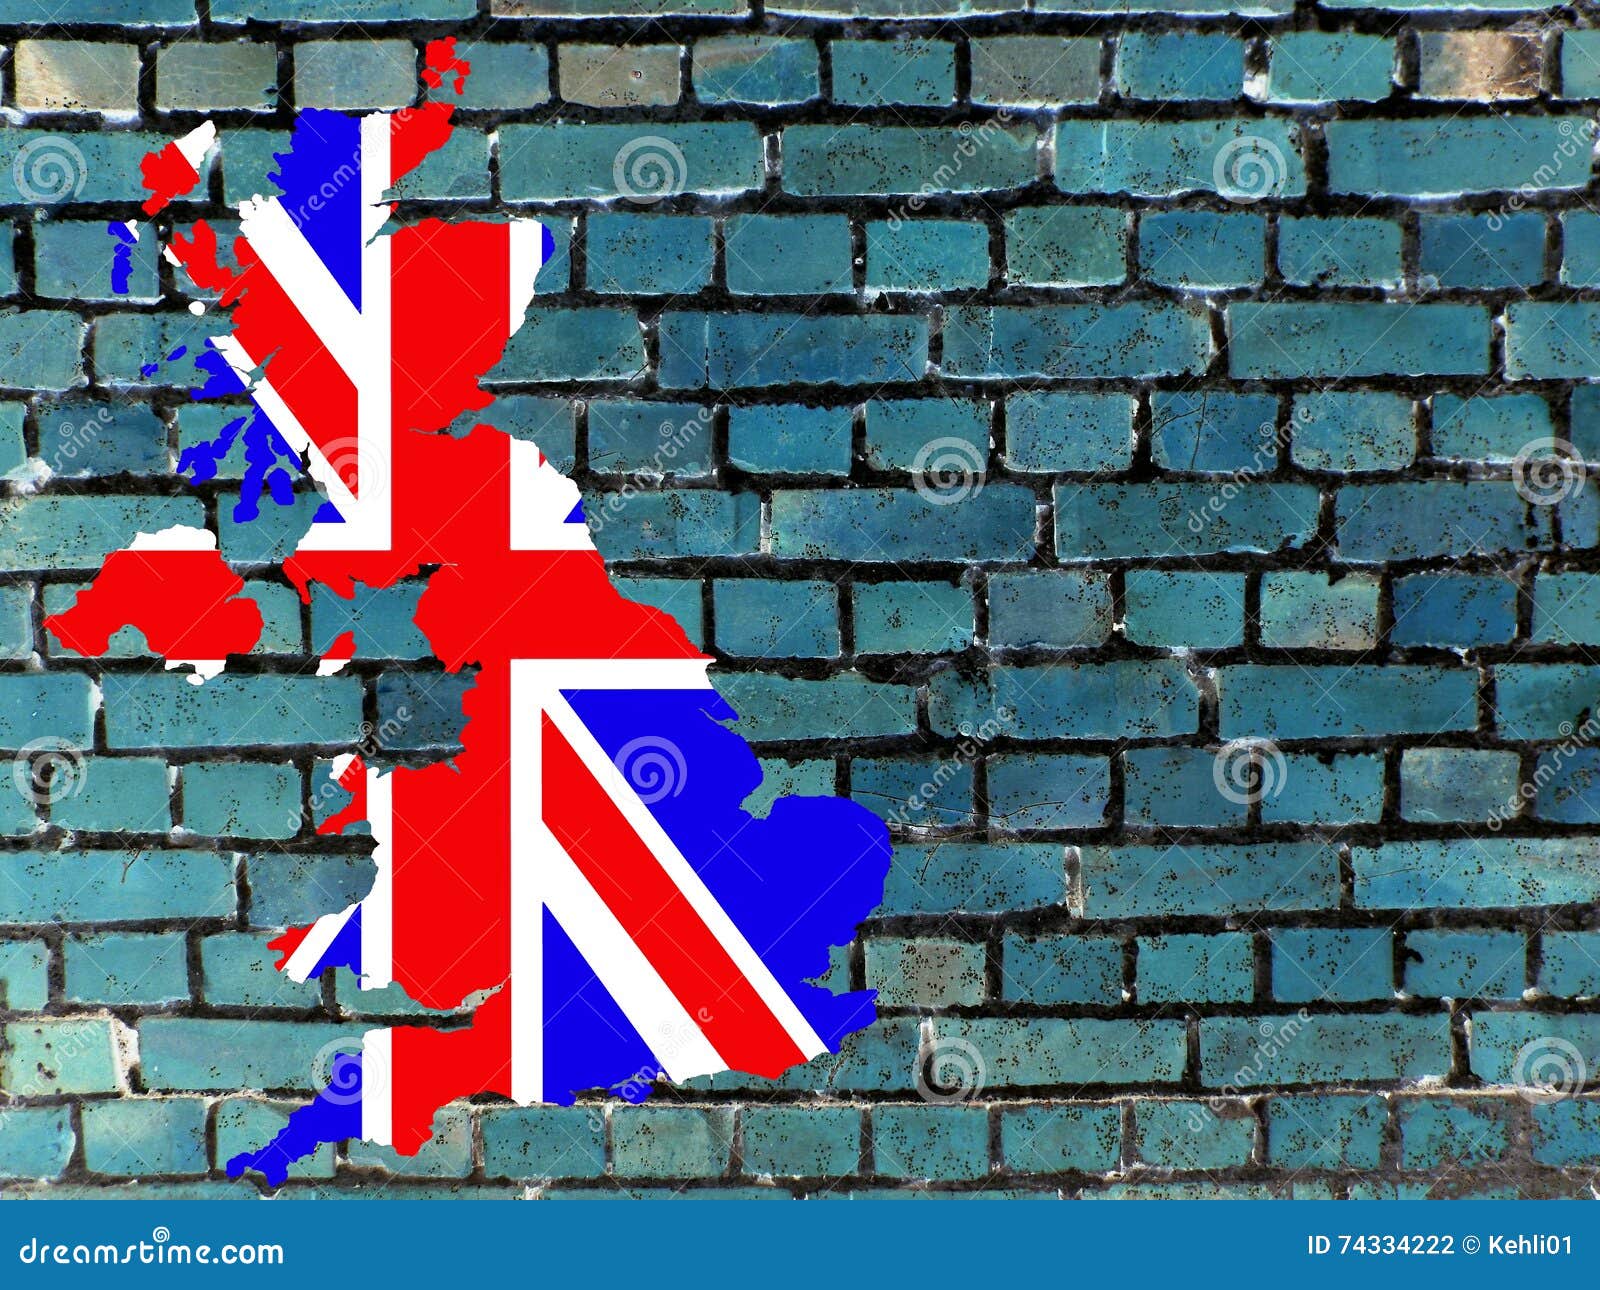 Топик: The United Kingdom of Great Britain